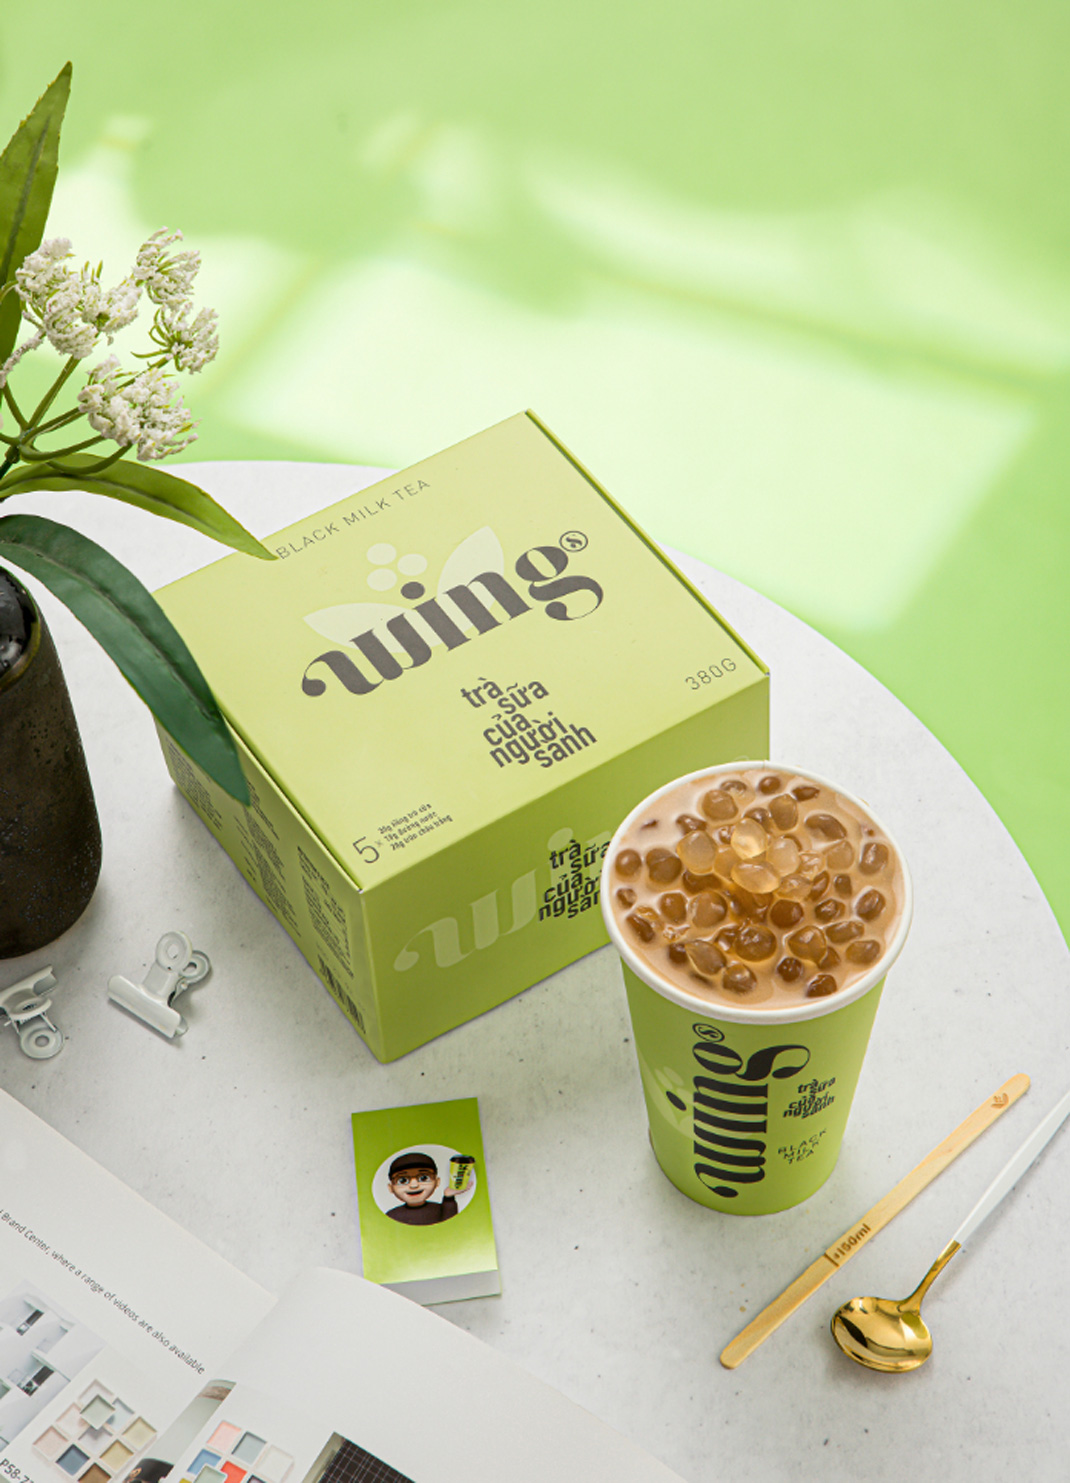 WINGS 速溶奶茶 - 黑奶茶 越南 河内 饮料 奶茶 字体设计 绿色 包装设计 logo设计 vi设计 空间设计